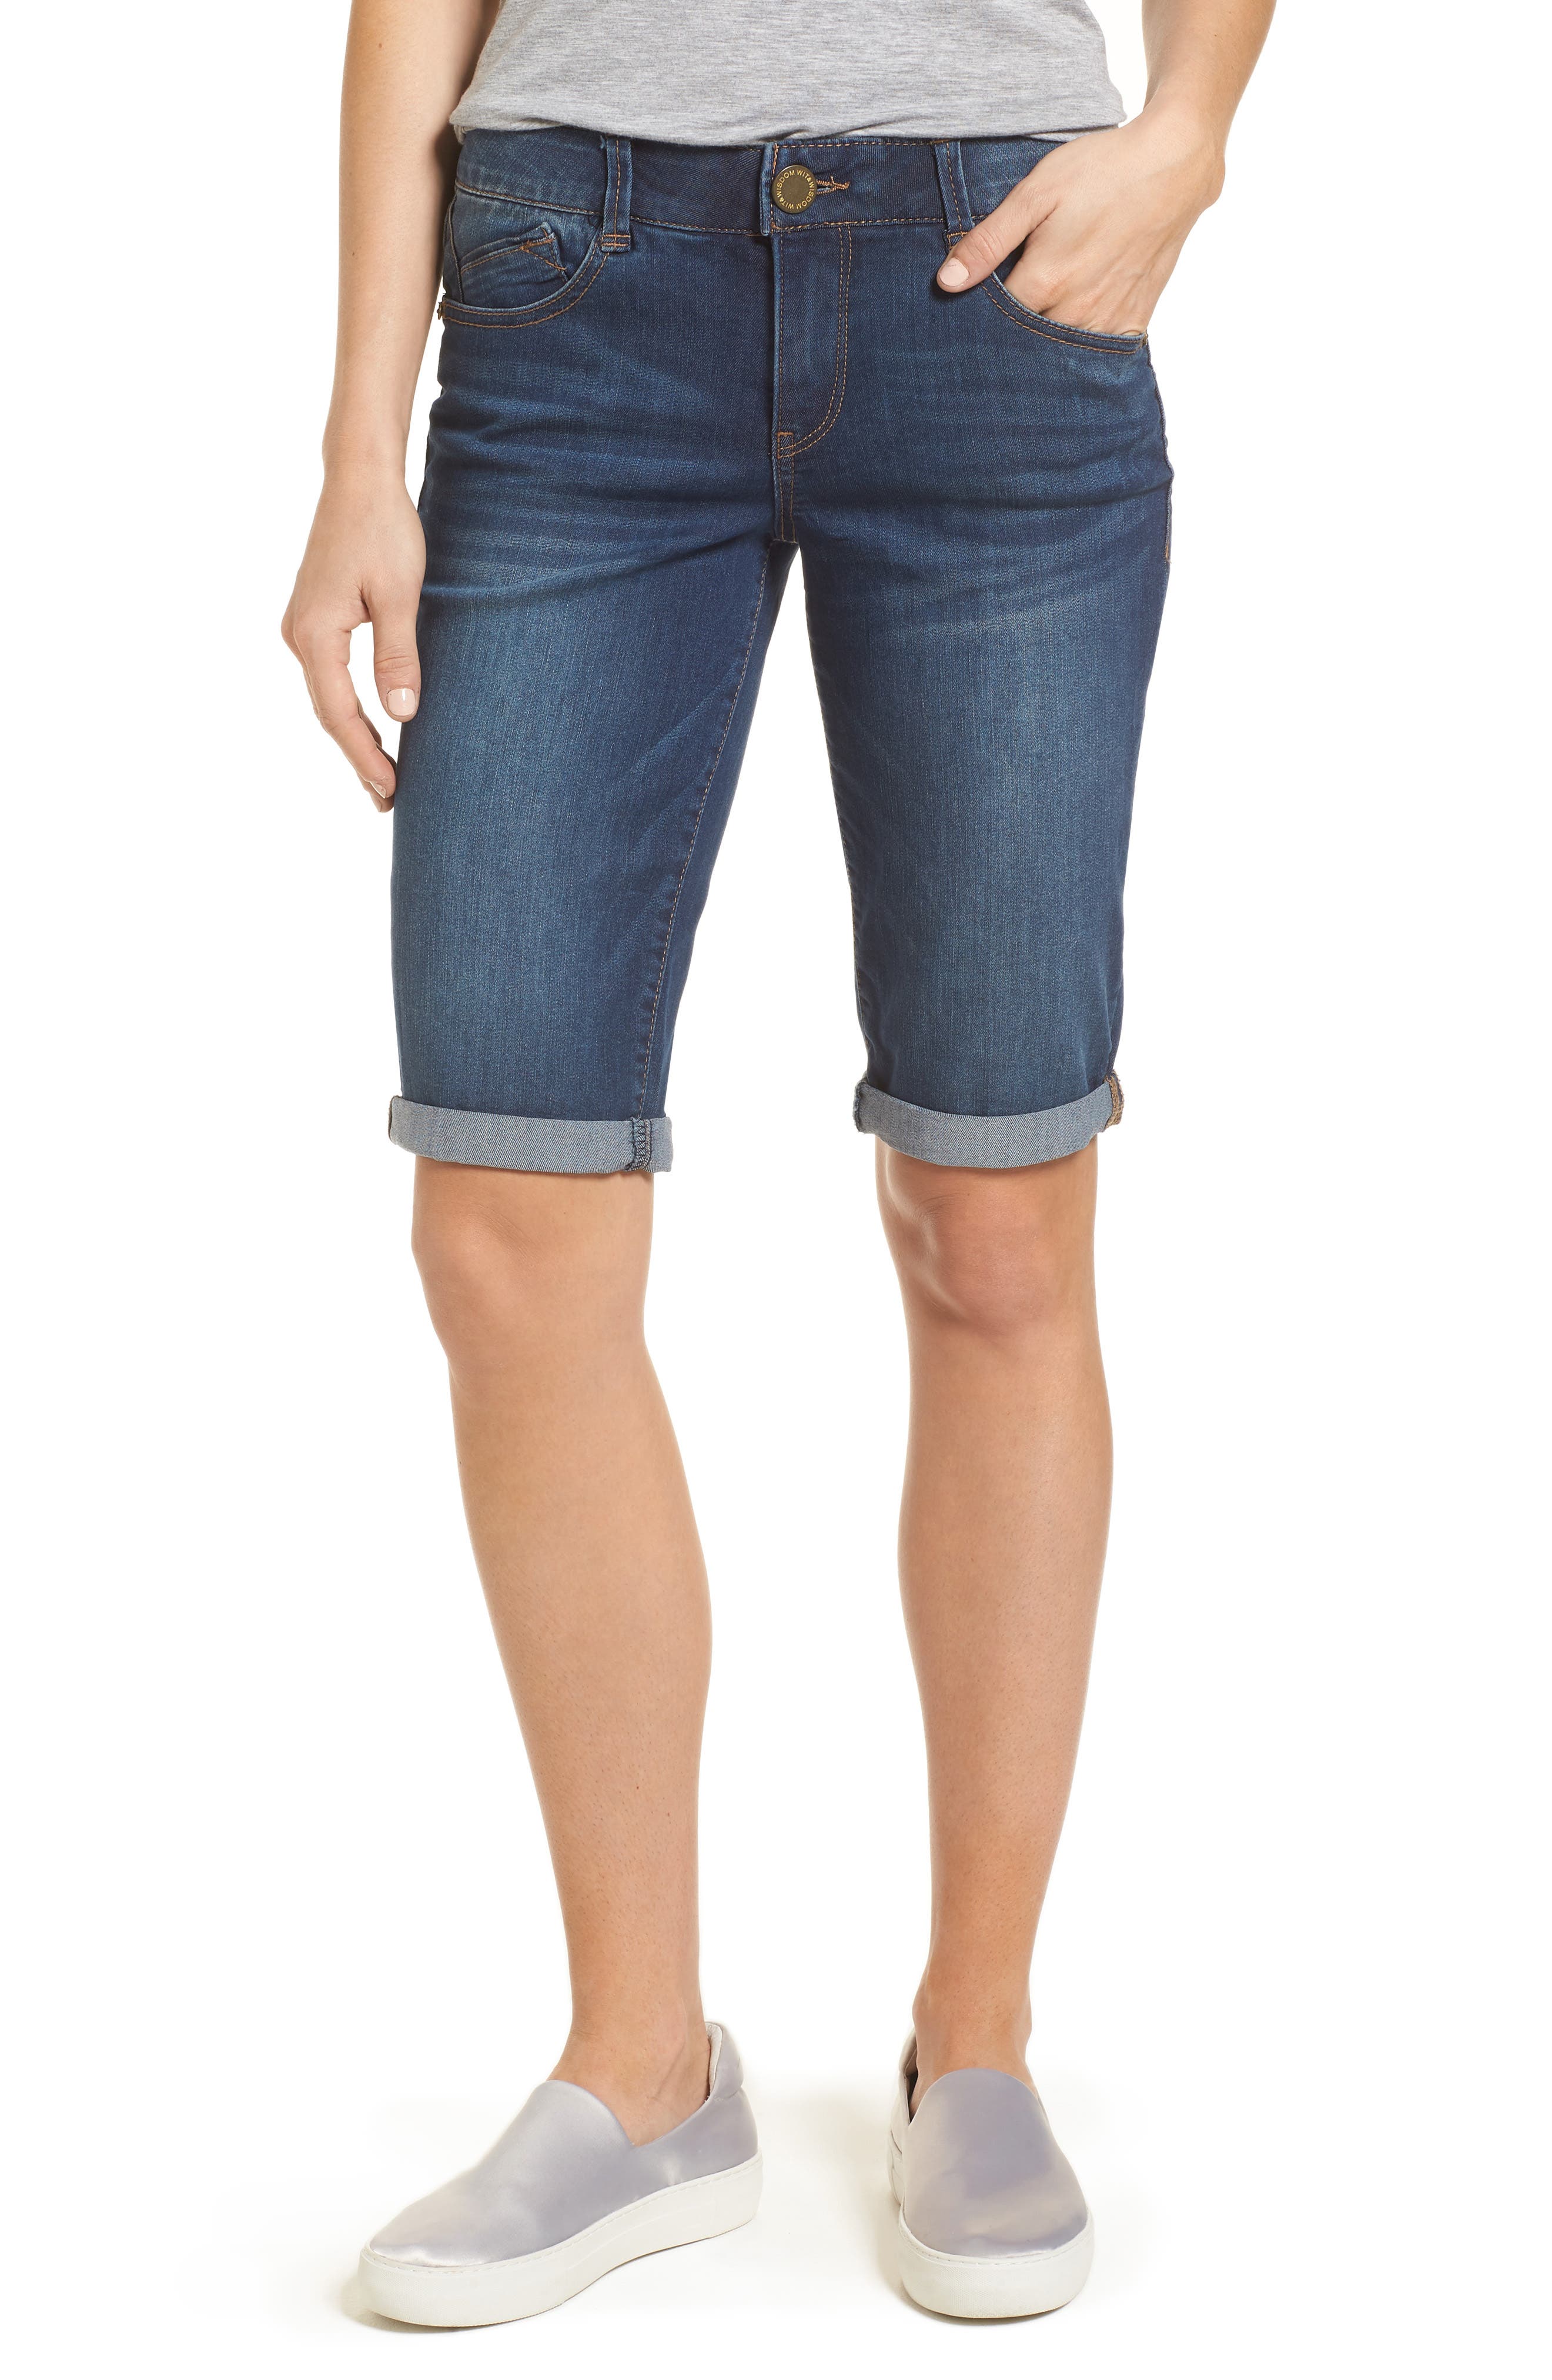 nordstrom jean shorts